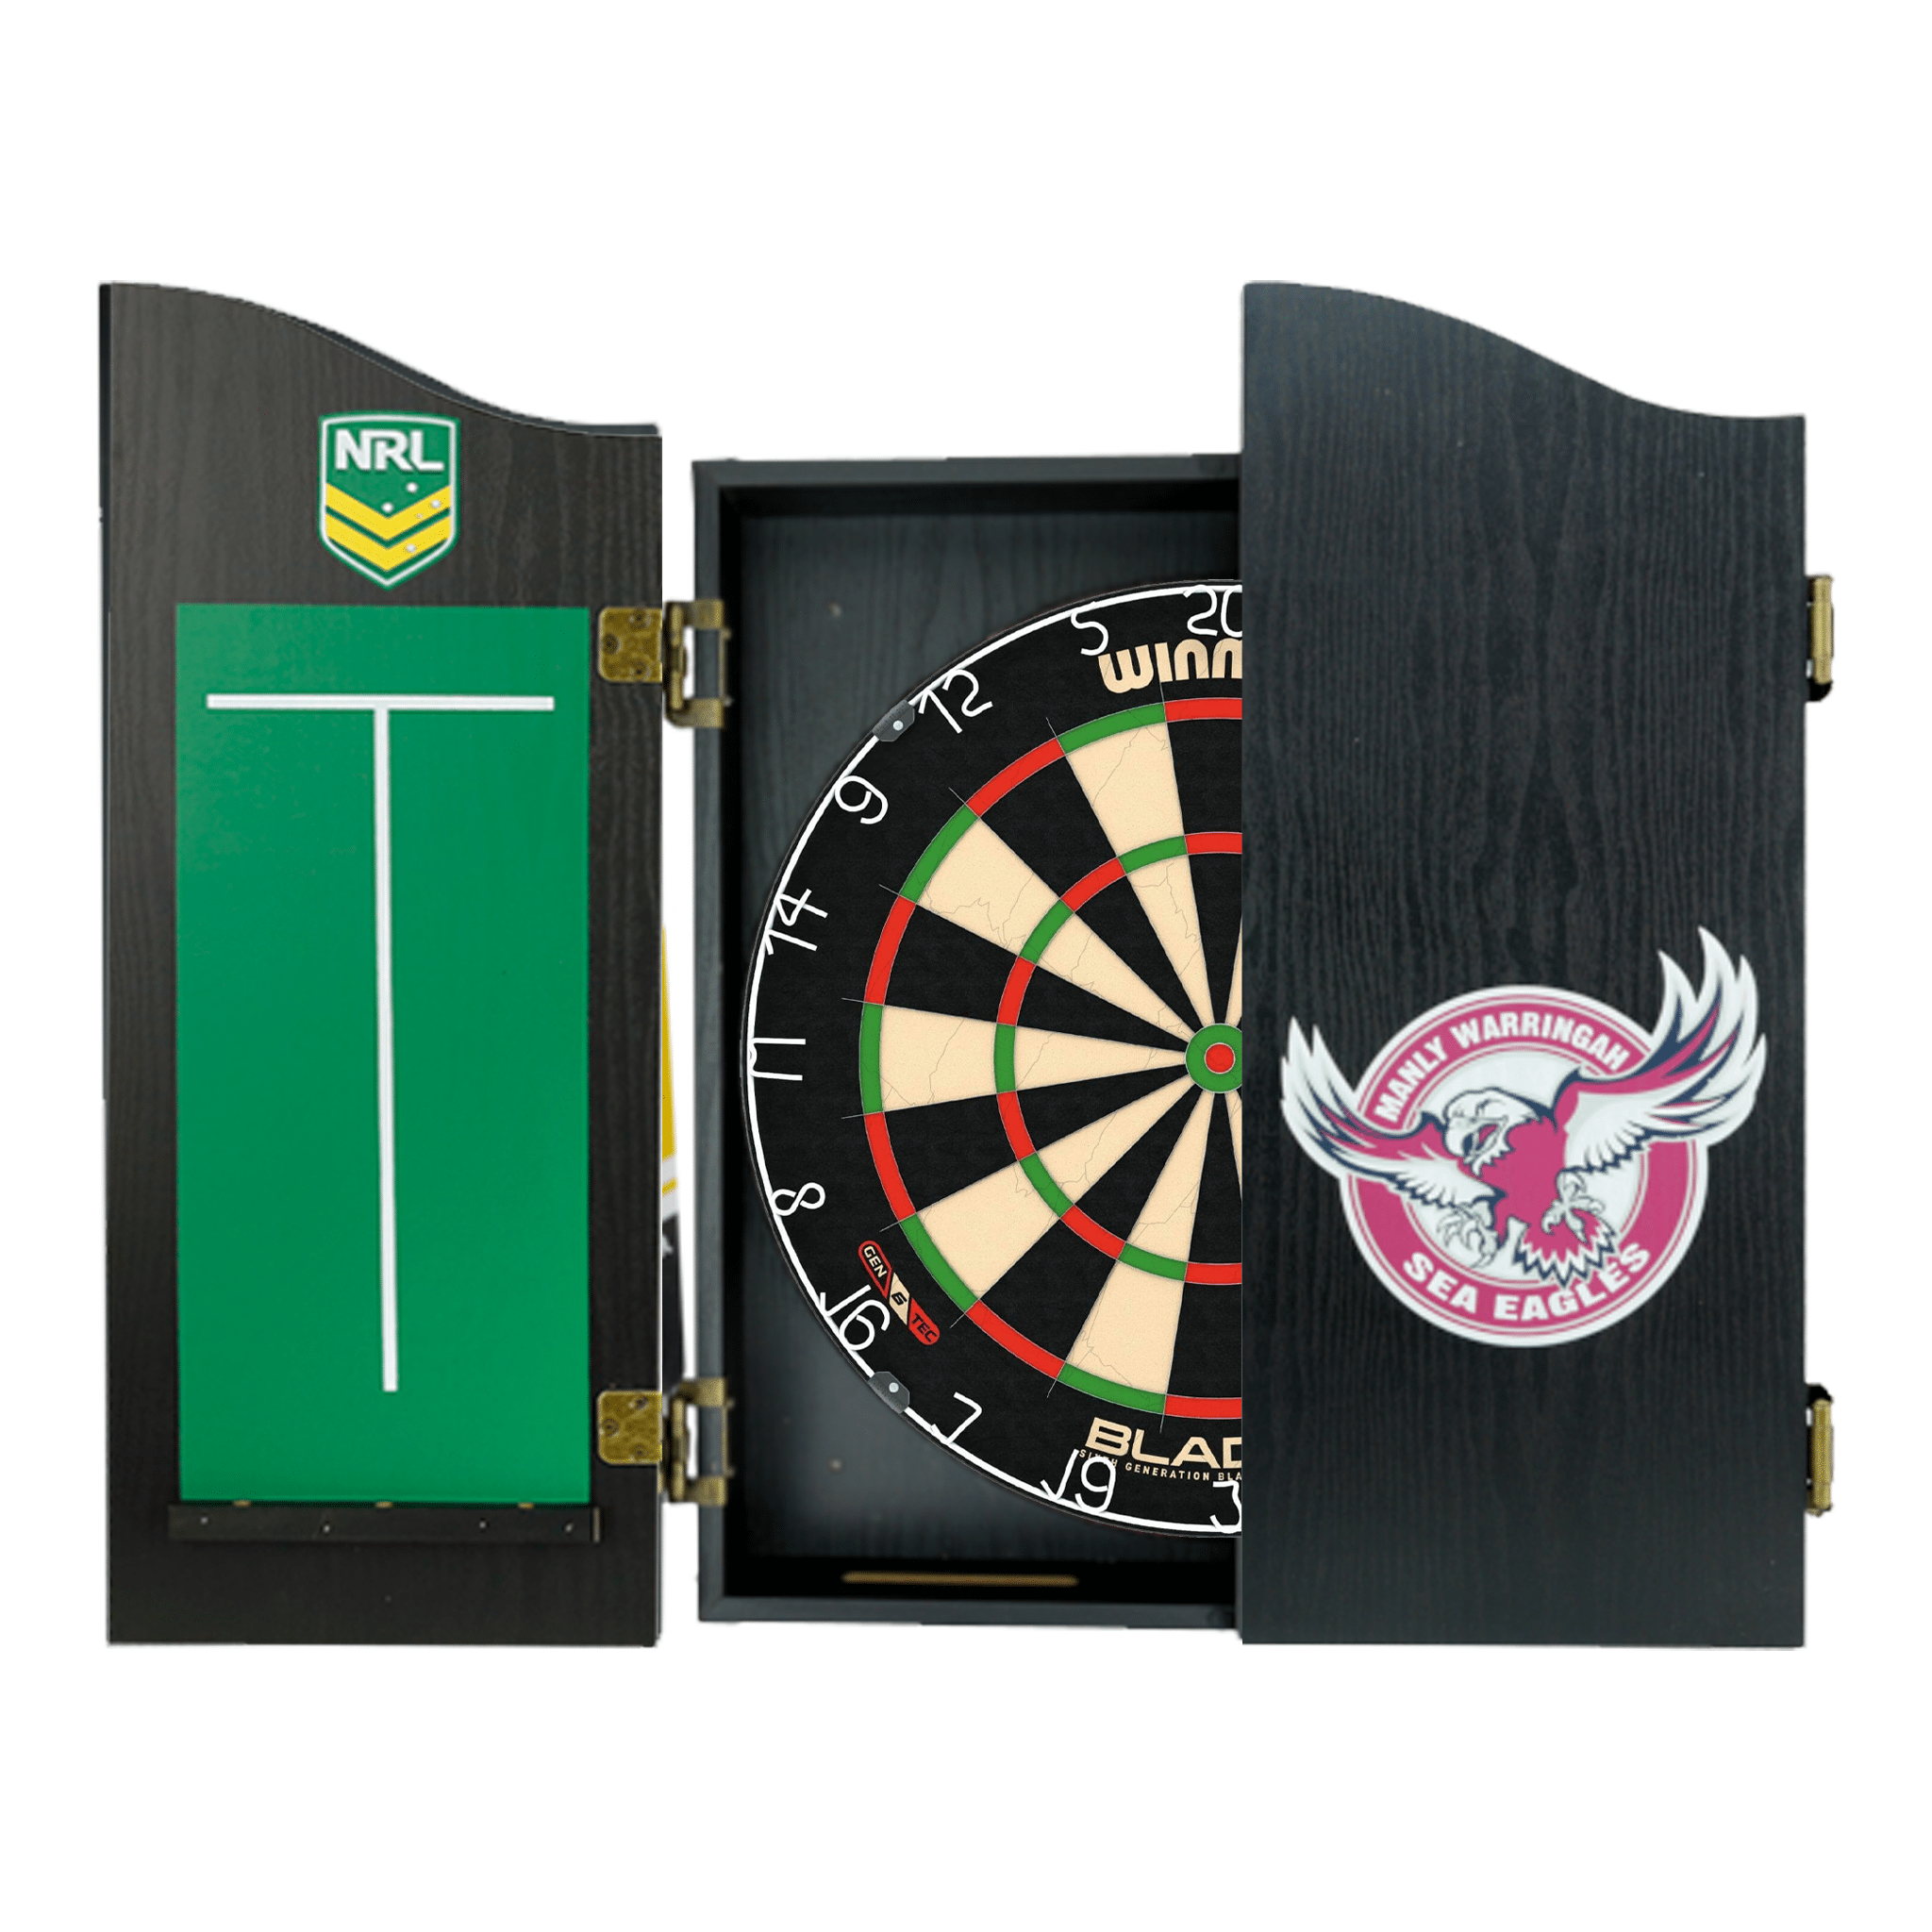 Winmau Blade 6 Dartboard, Official NRL Cabinet & Darts - Complete Darts Set Blade 6 / Manly Sea Eagles Boards